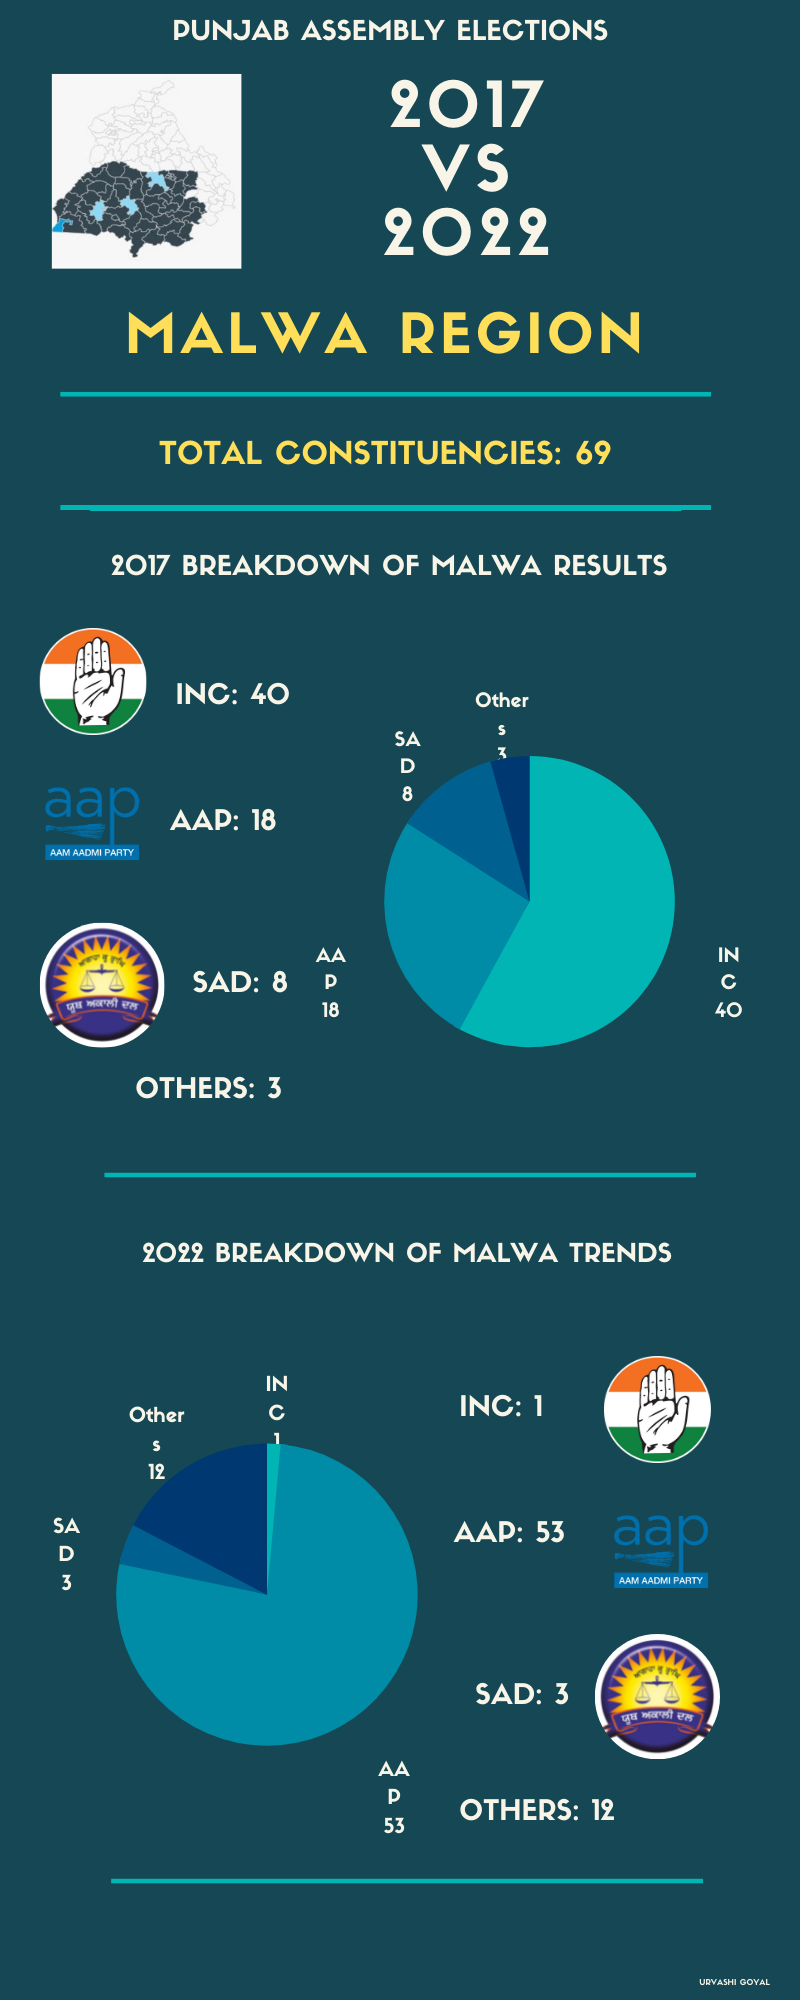 Malwa Region Trends